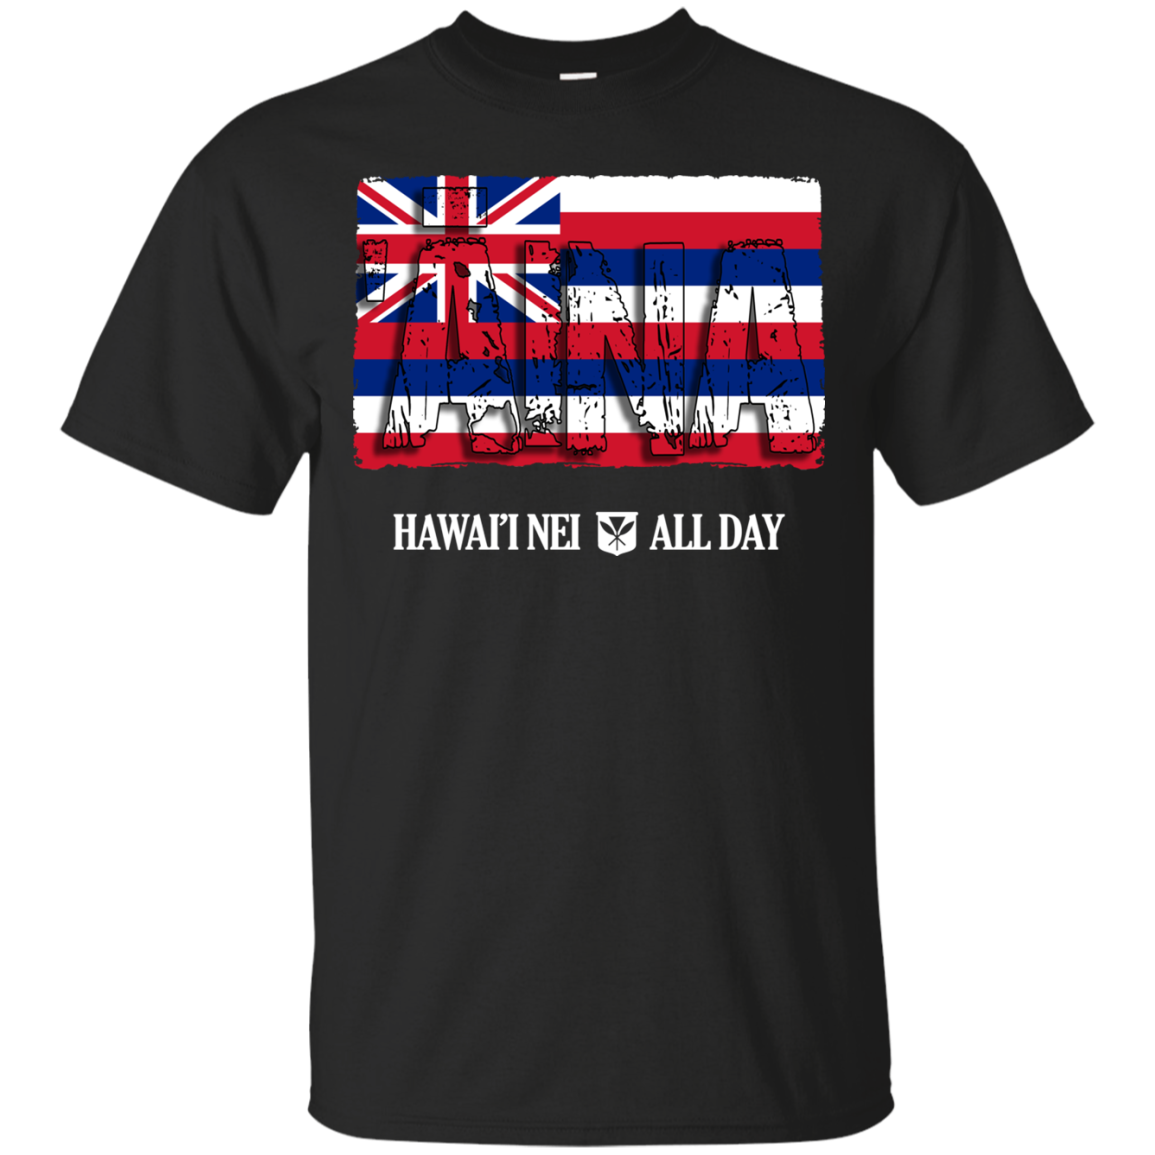 ʻĀina Hawai'i Nei Ultra Cotton T-Shirt, T-Shirts, Hawaii Nei All Day